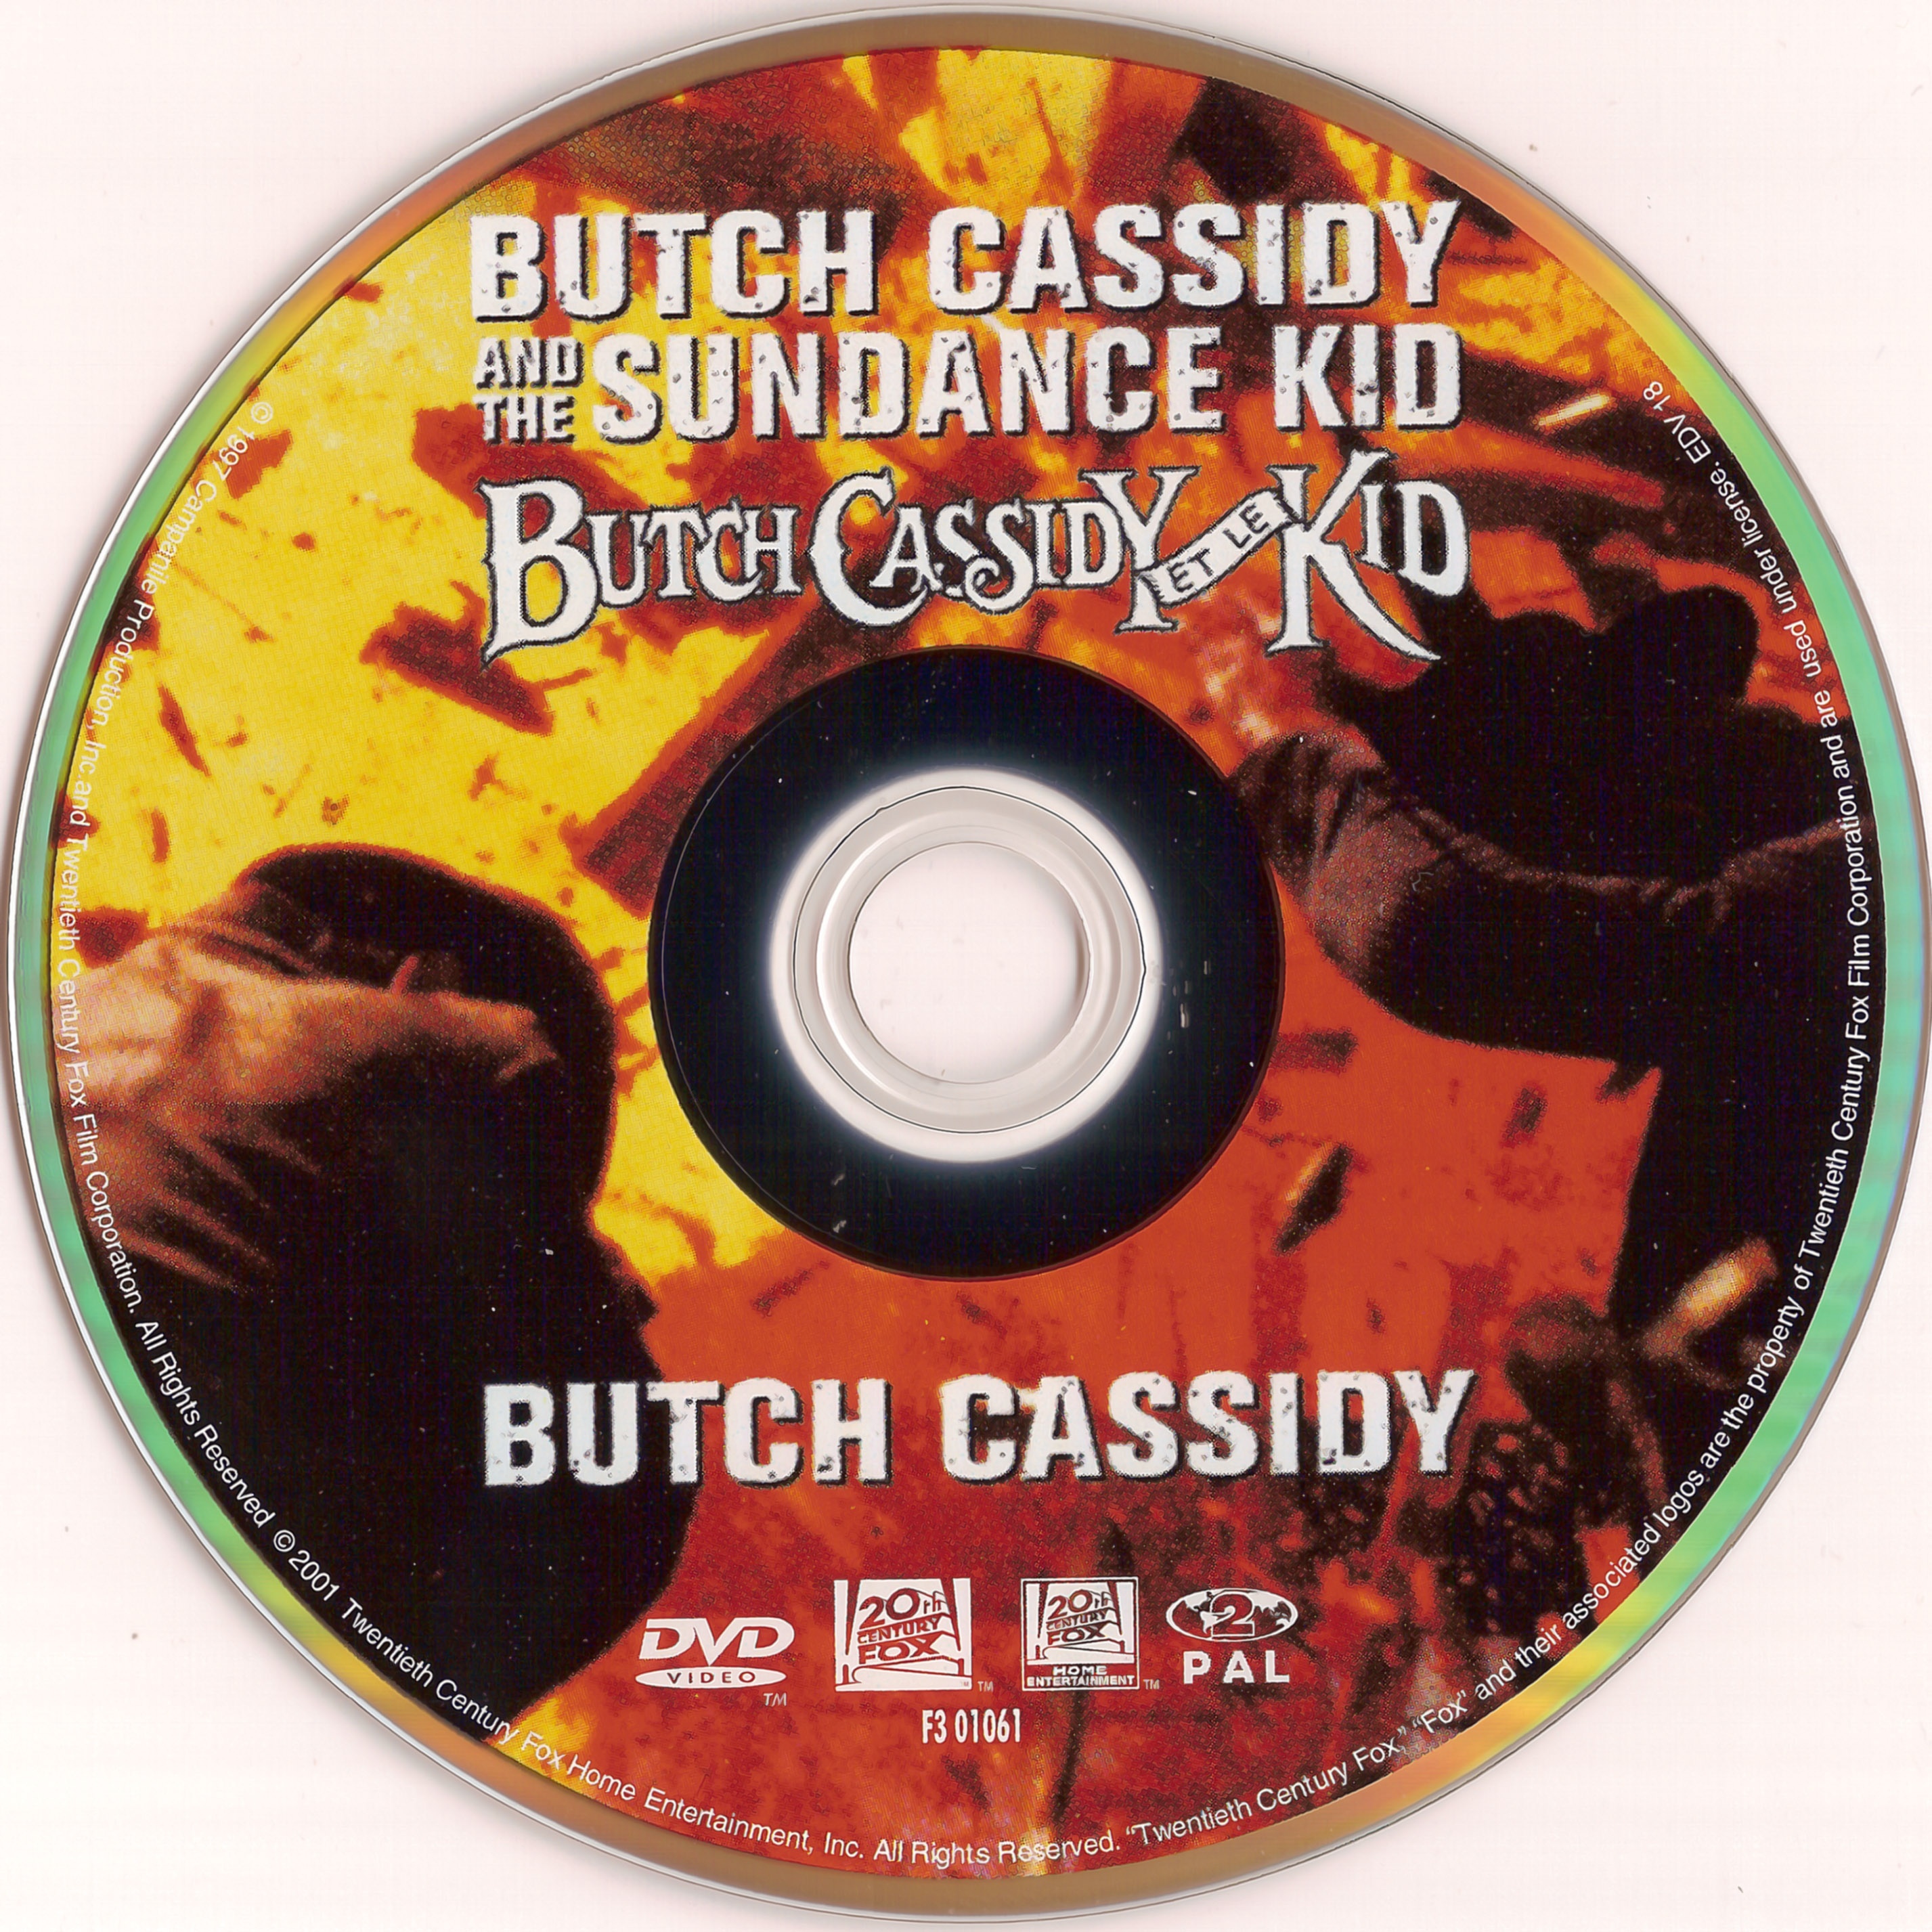 Butch Cassidy et le Kid